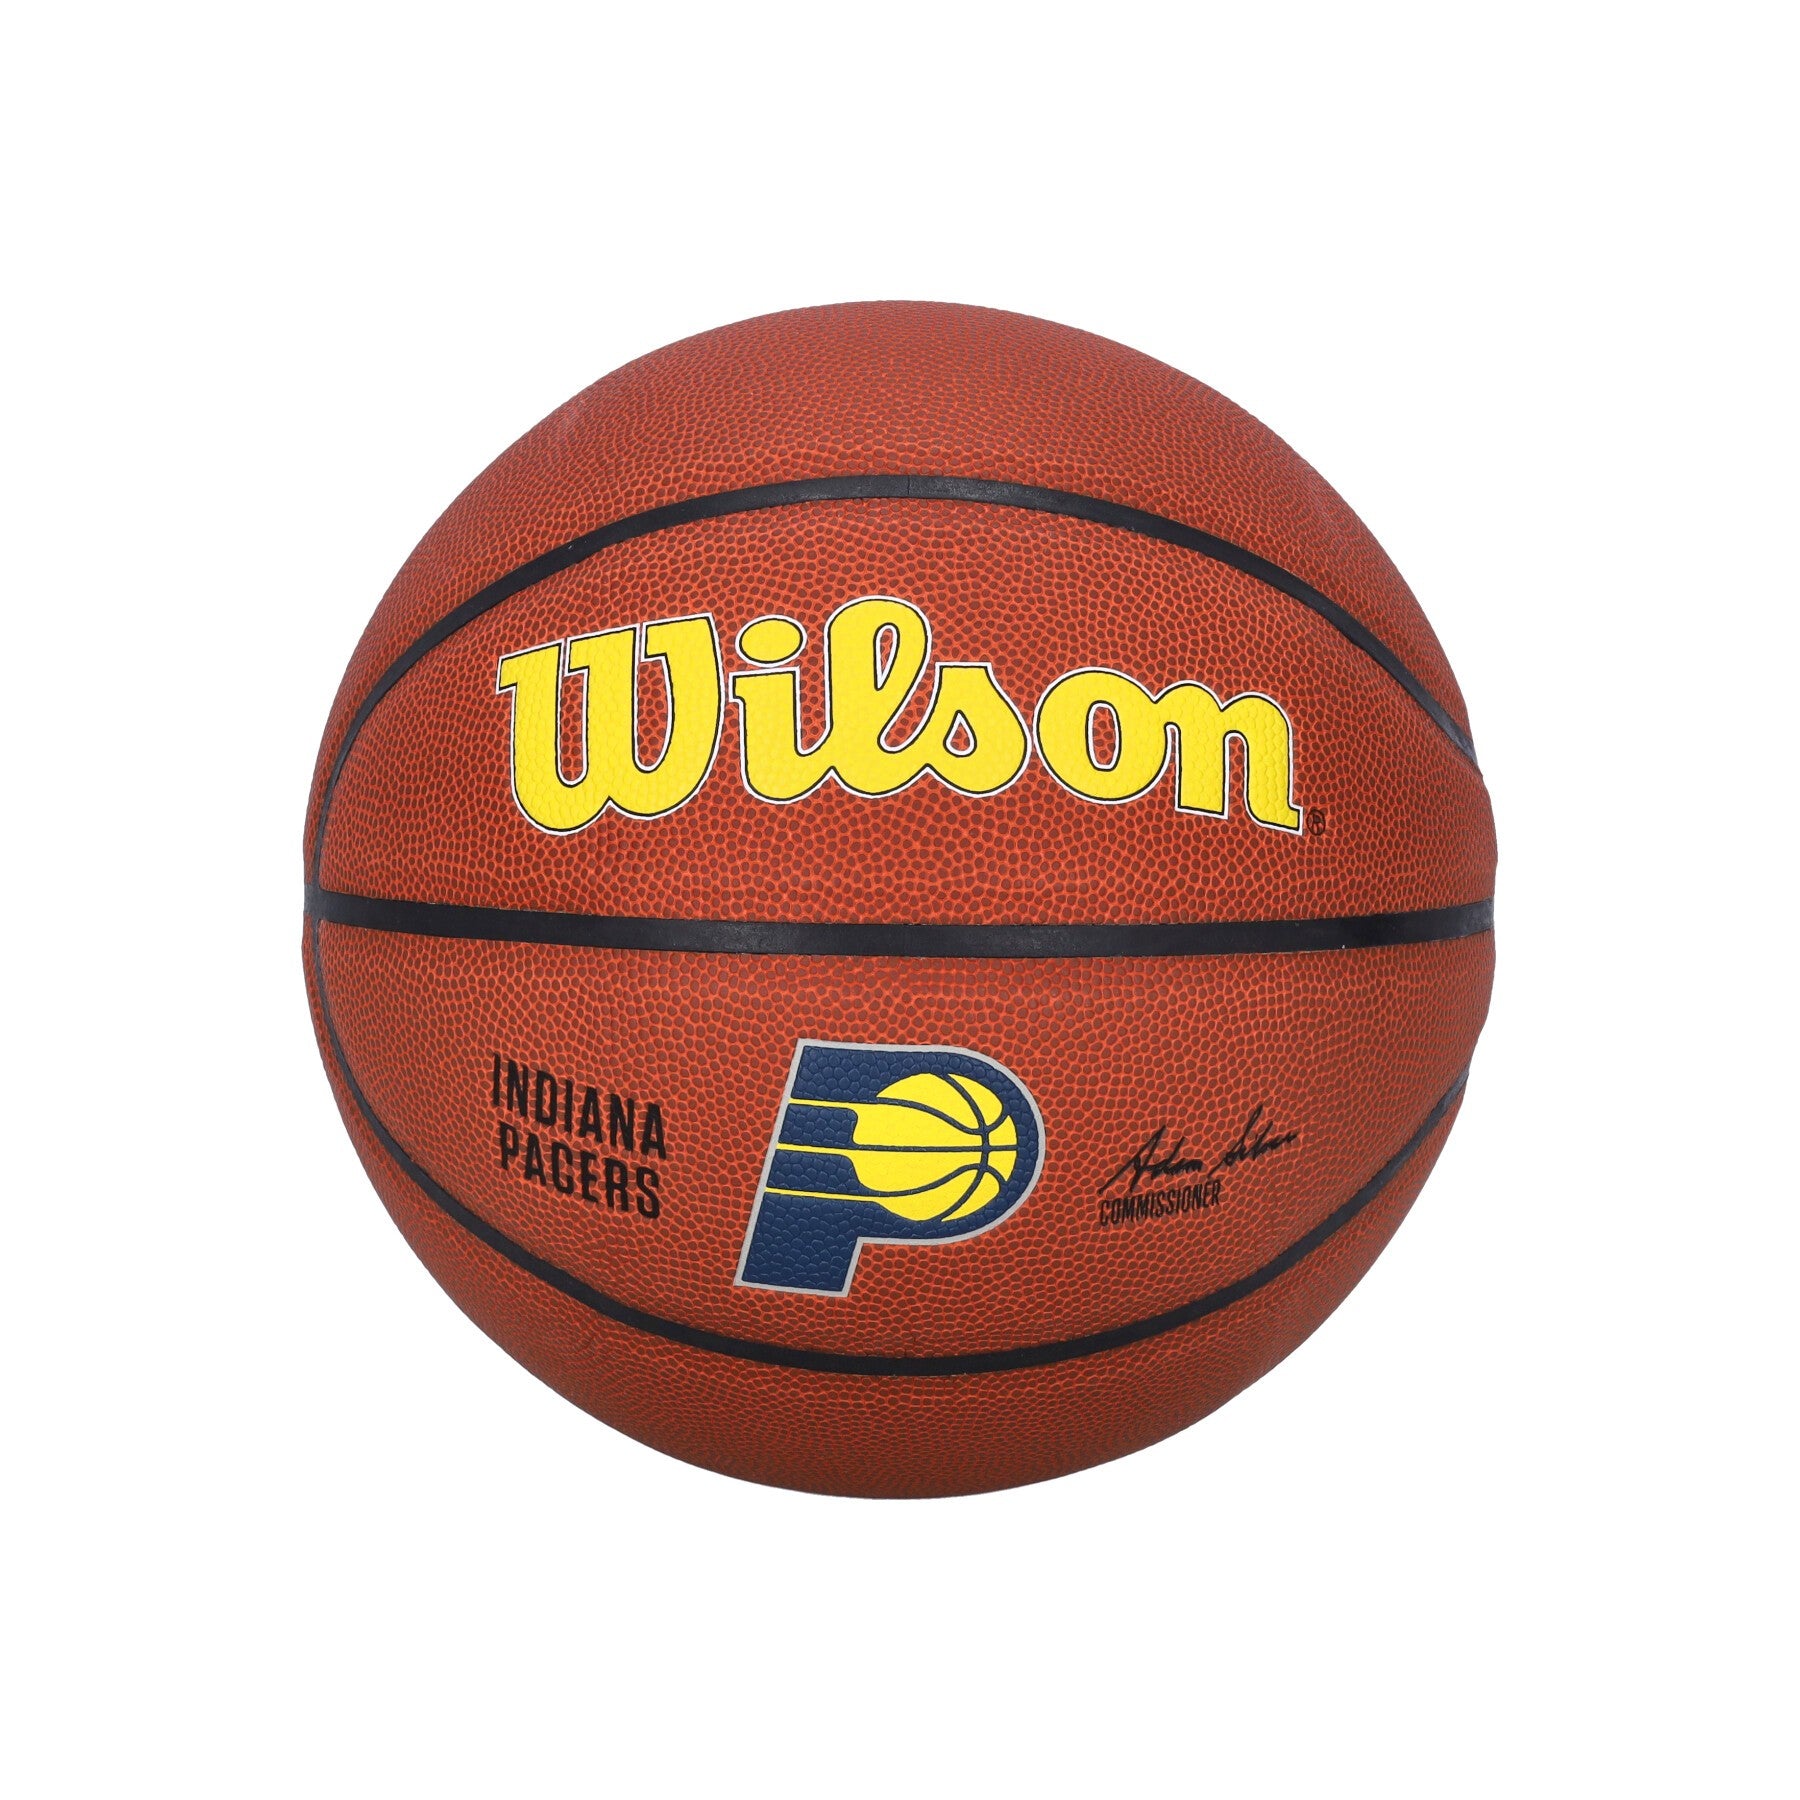 Pallone Uomo Nba Team Alliance Basketball Size 7 Indpac Original Team Colors